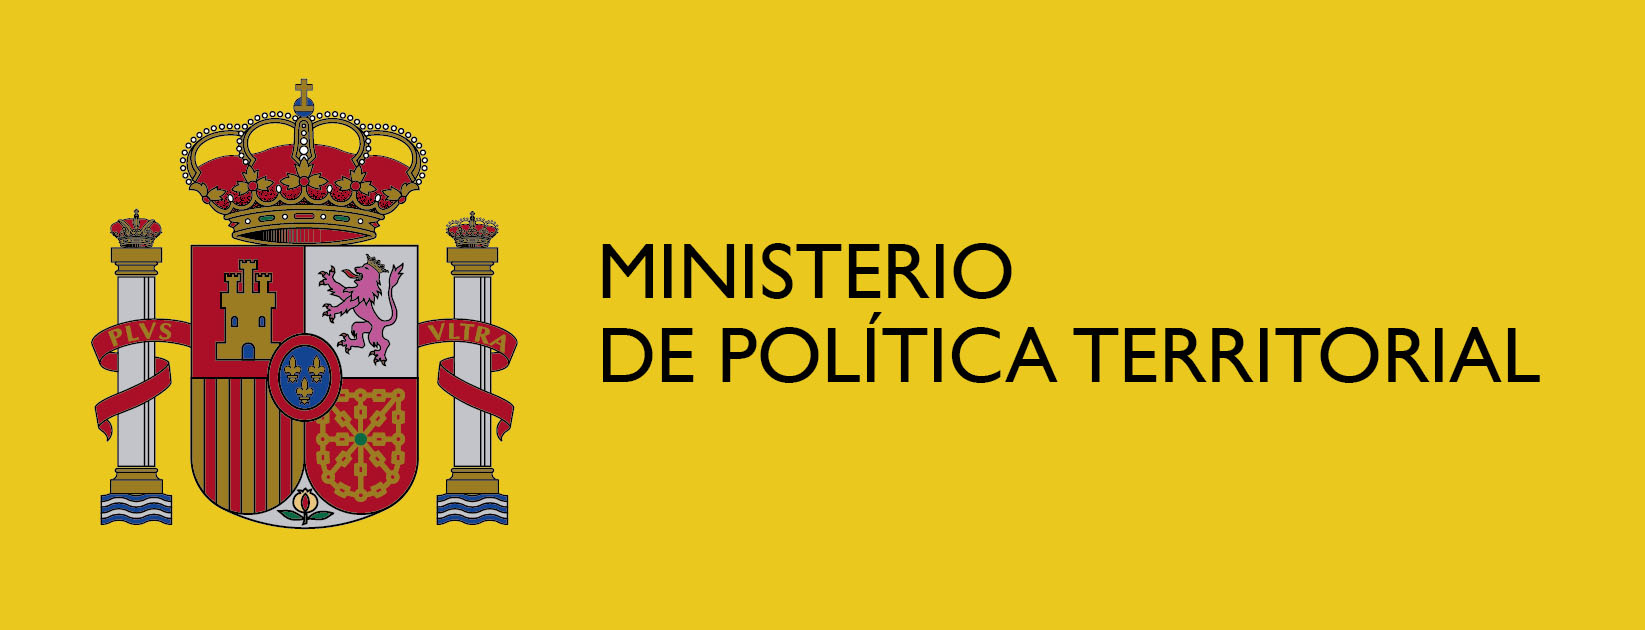 Ministeri Política Territorial.jpg